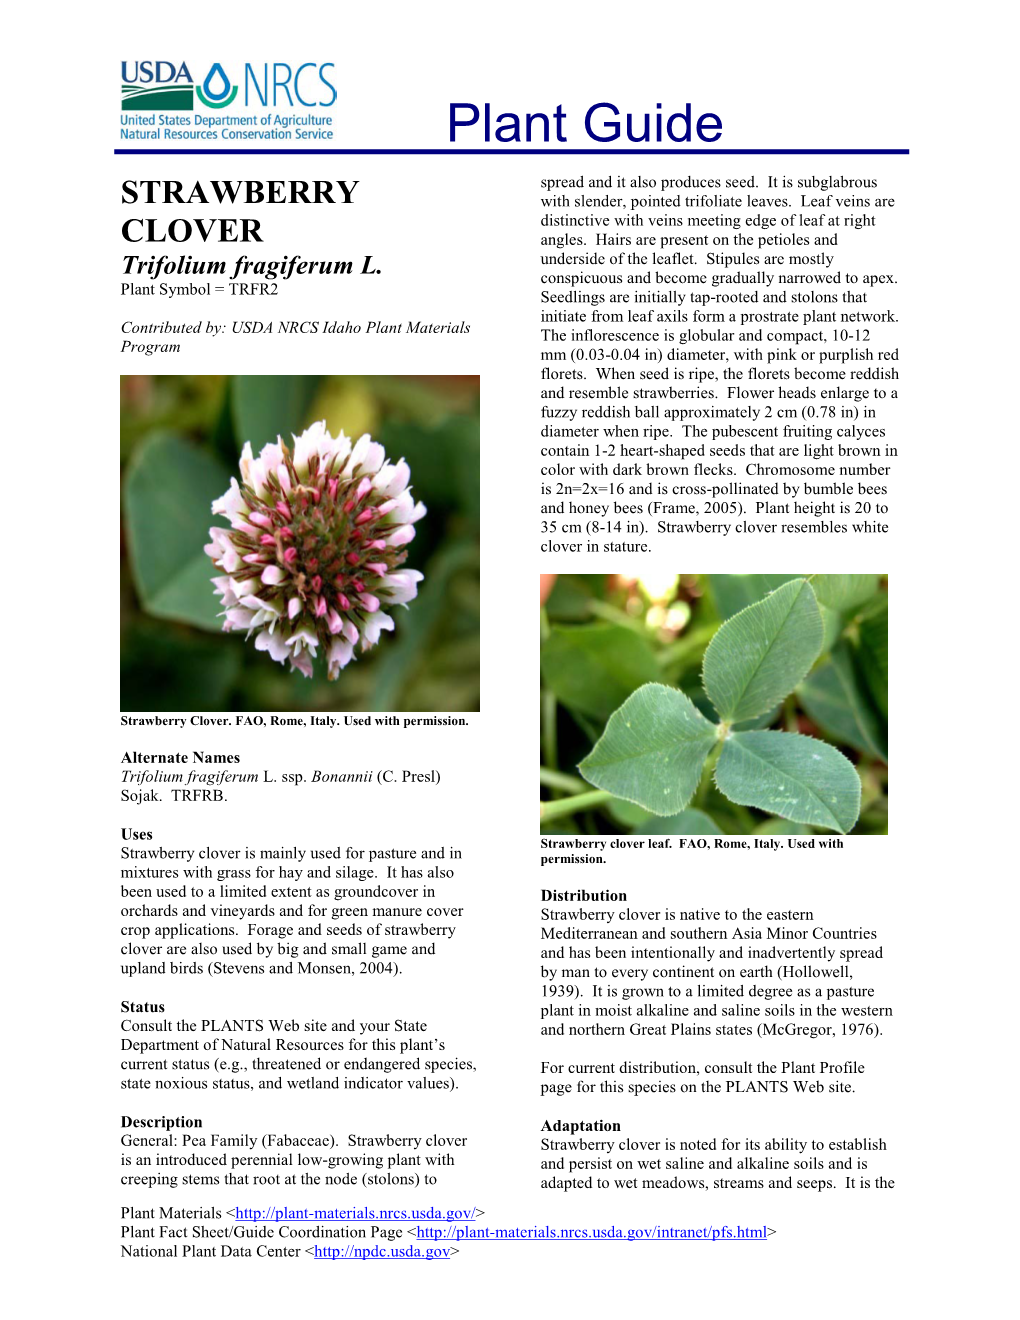 Plant Guide Strawberry Clover (Trifolium Fragiferum)